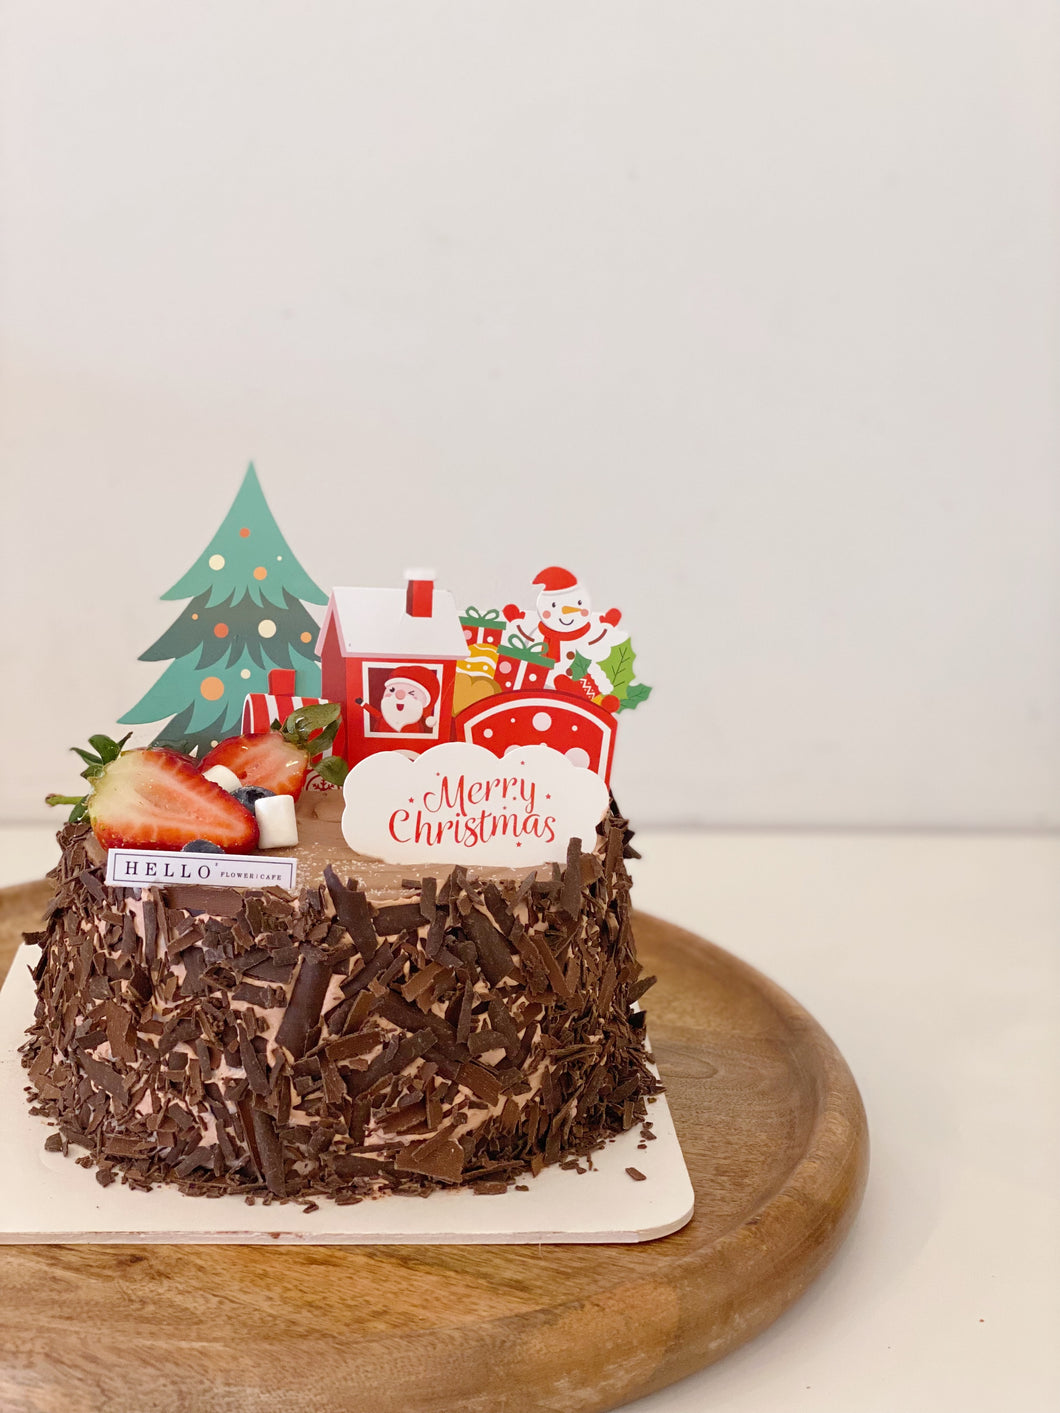 The Chocology Christmas Cake